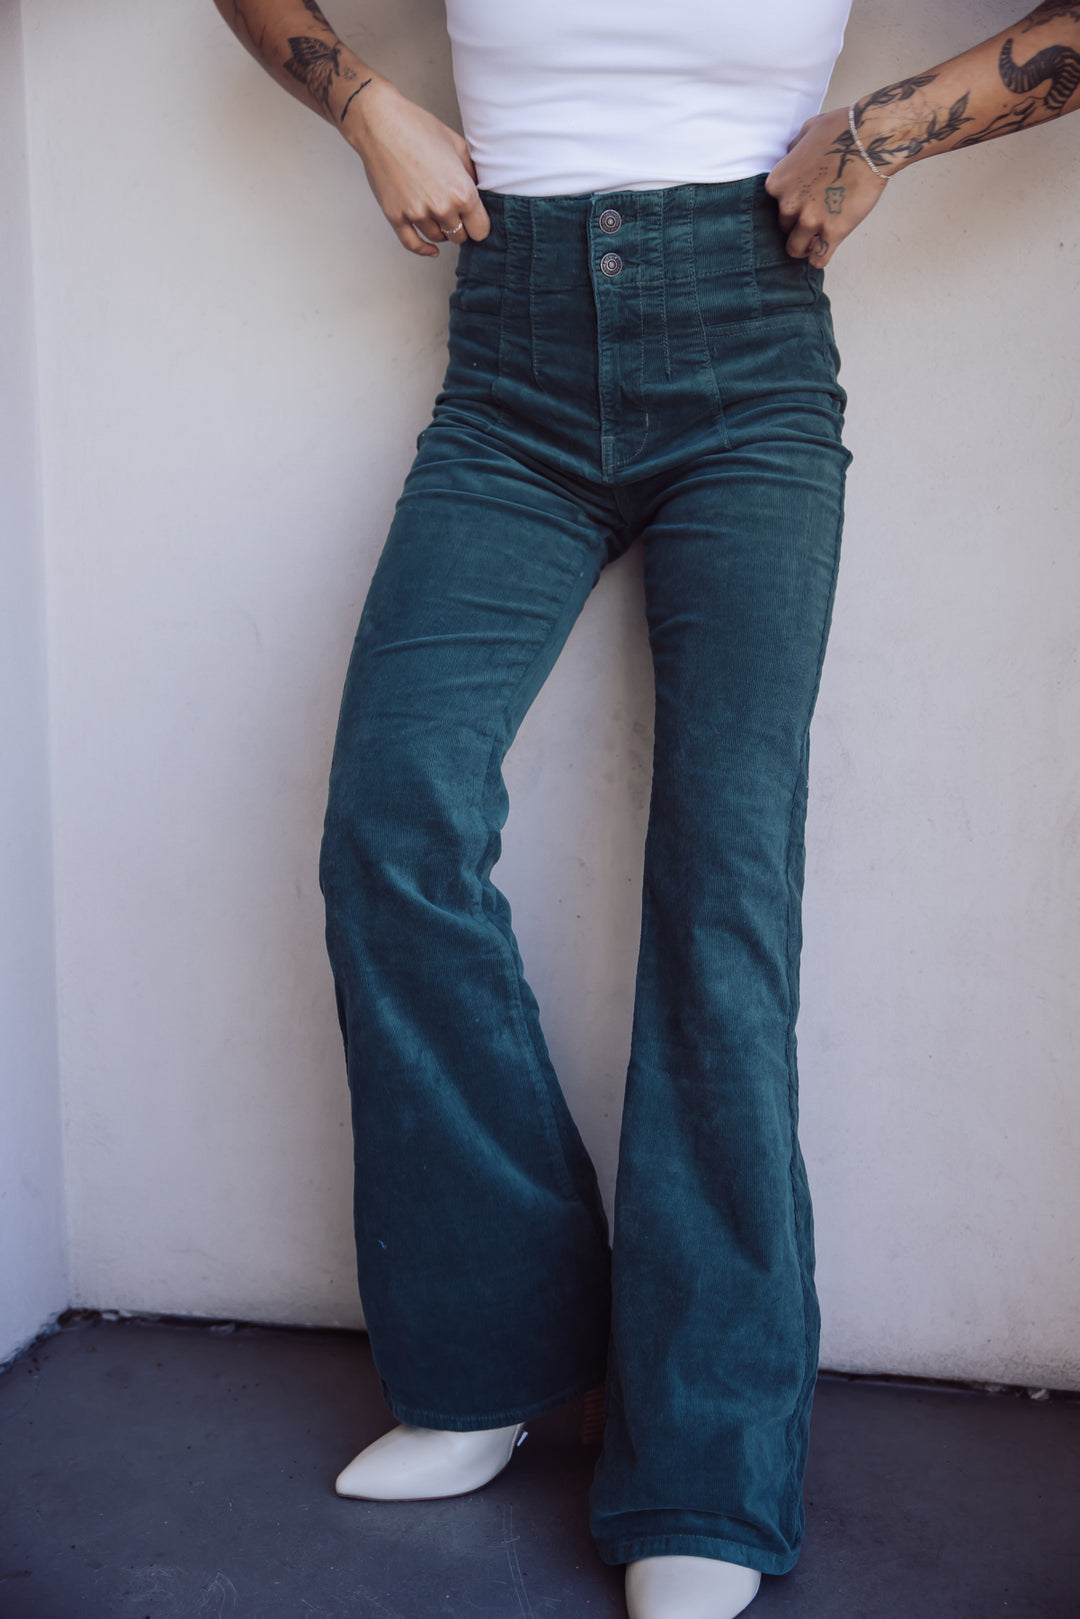 We The Free People Women's Retro Jayde Corduroy Green Flare Pants Jeans  Size 27